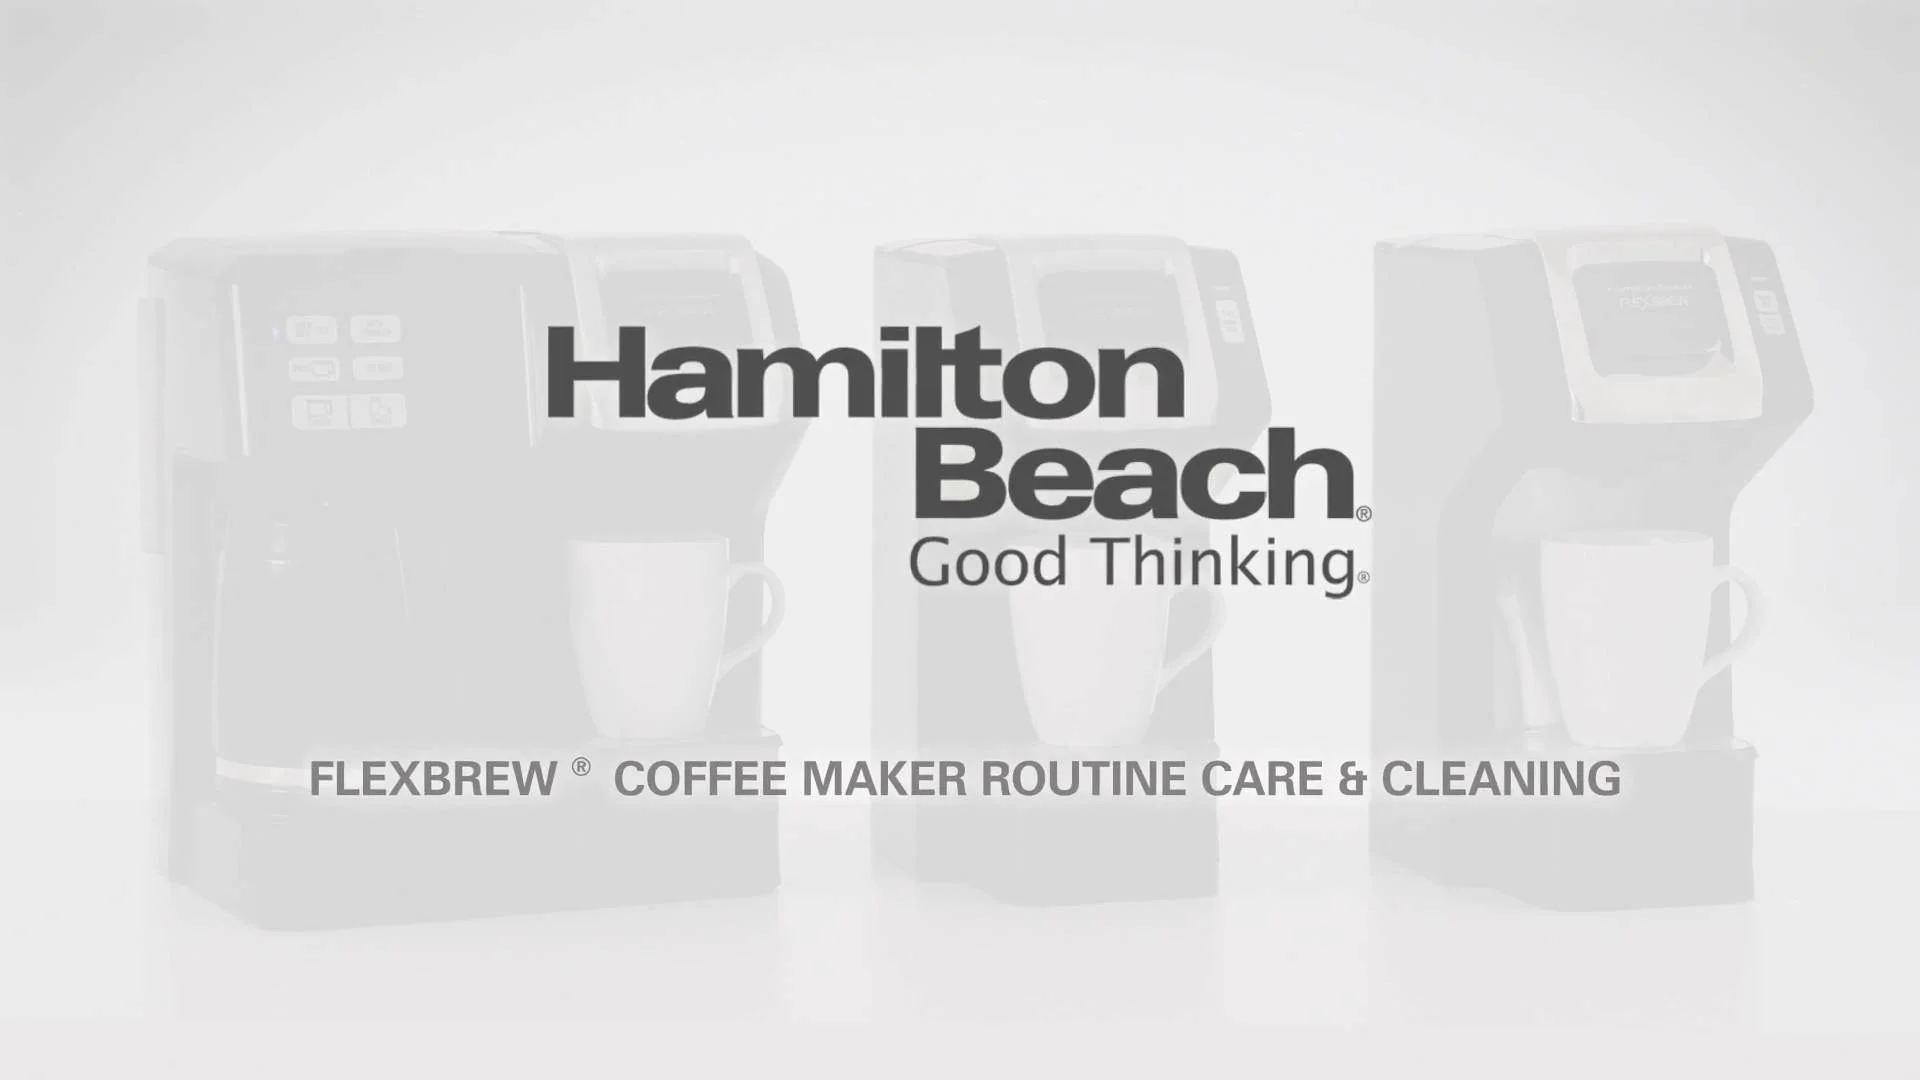 Hamilton Beach FlexBrew® Trio Coffee Maker - 49957